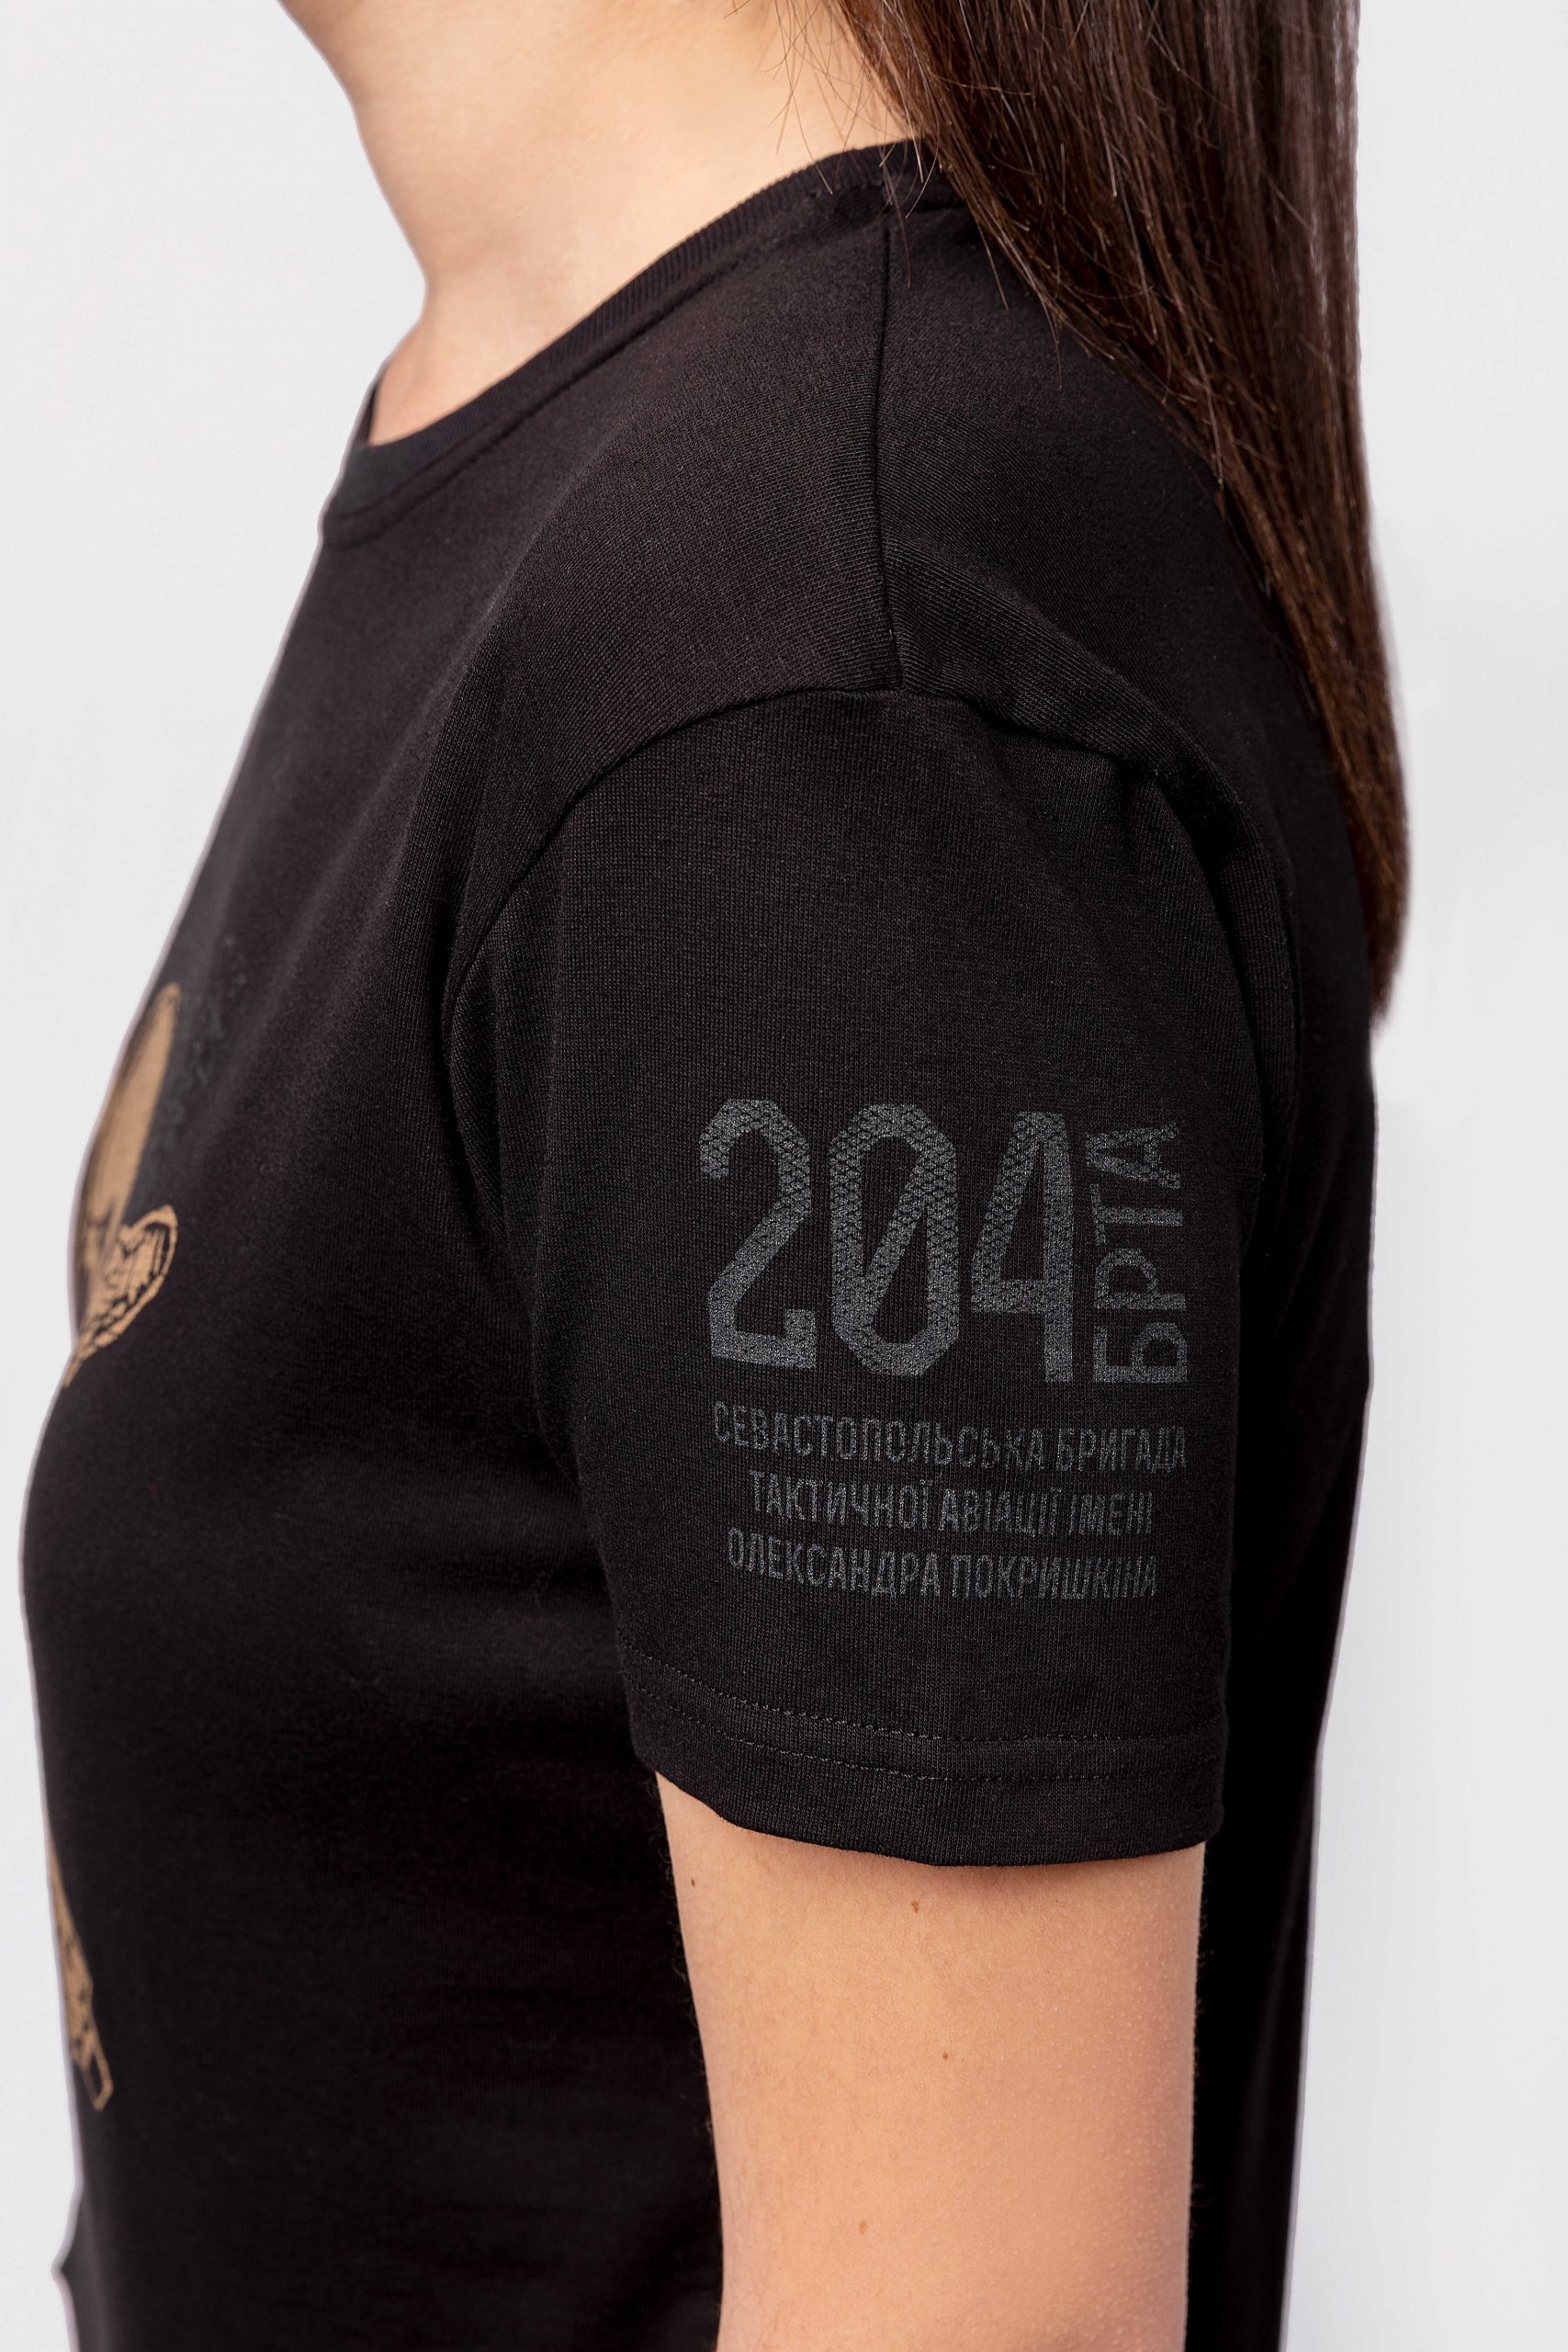 Women's T-Shirt 204 Brigade. Color black. 4.